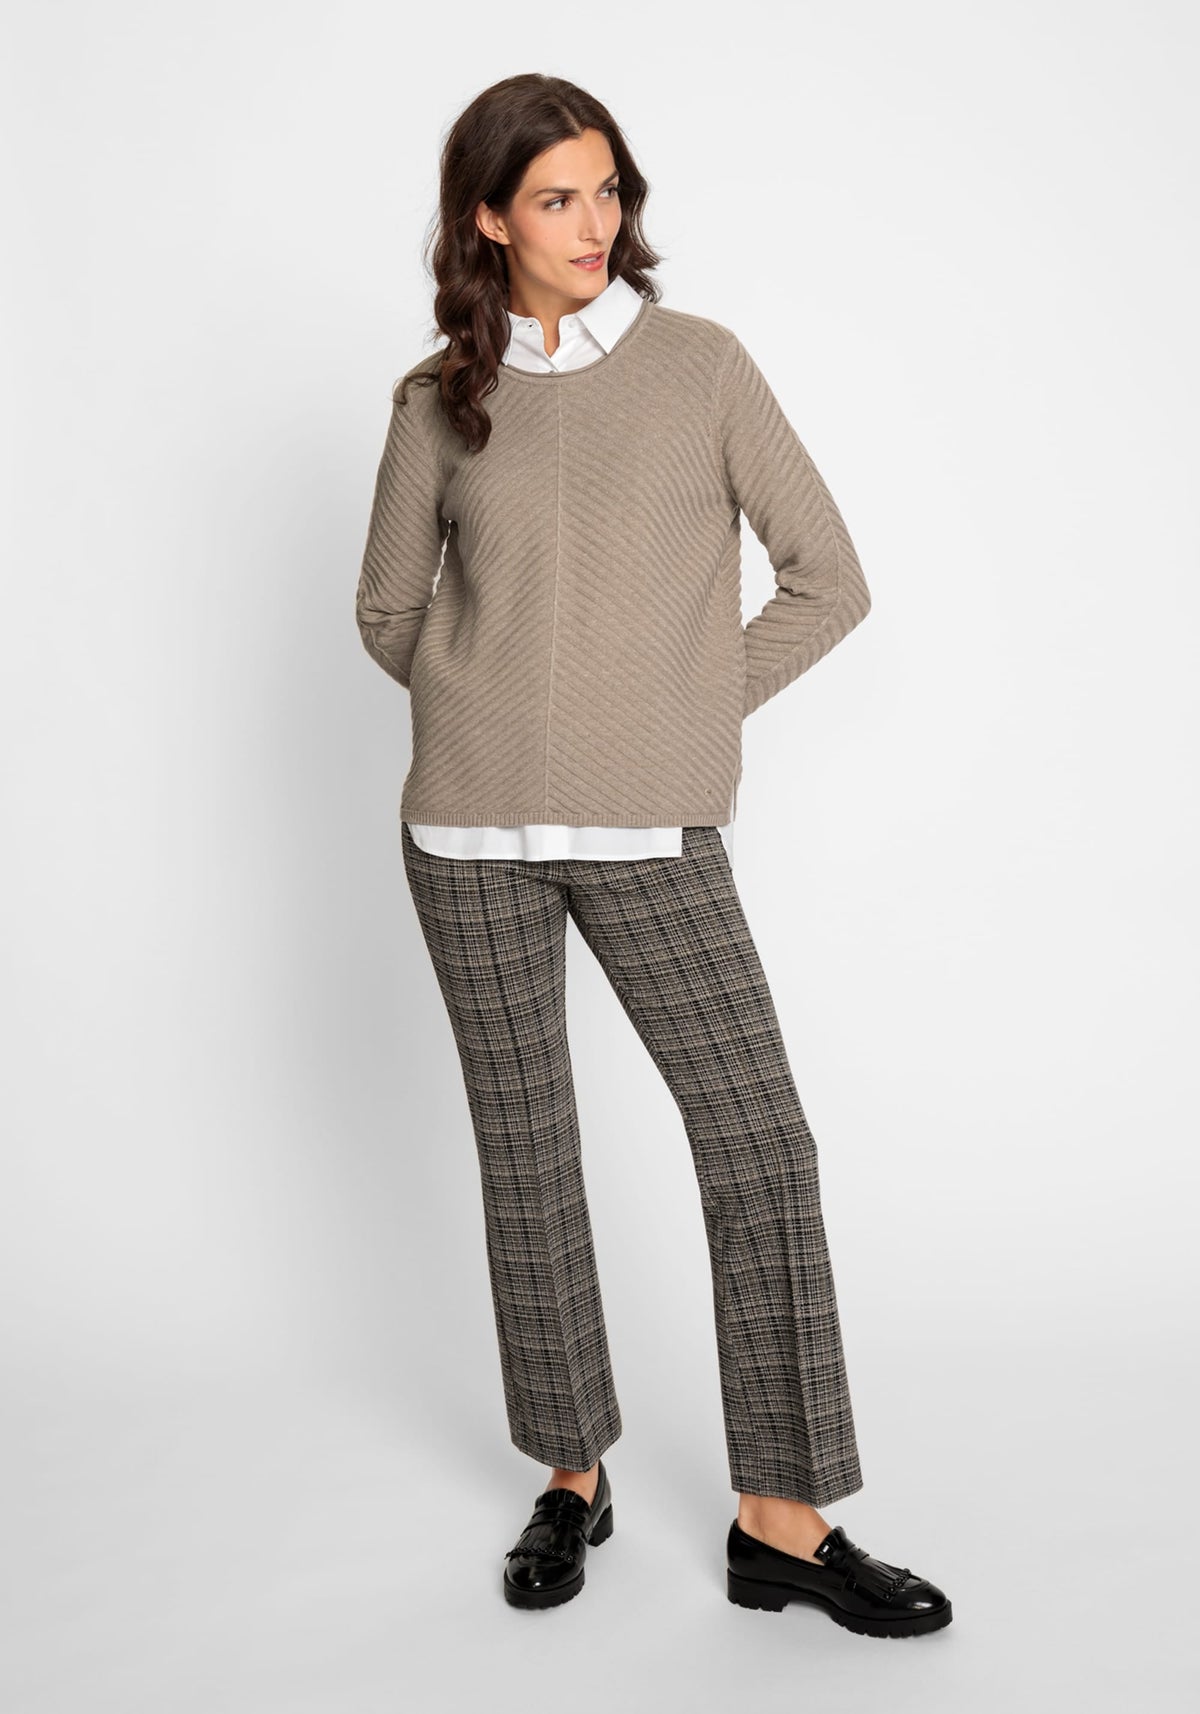 Cotton Blend Long Sleeve Round Neck Chevron Rib Knit Sweater